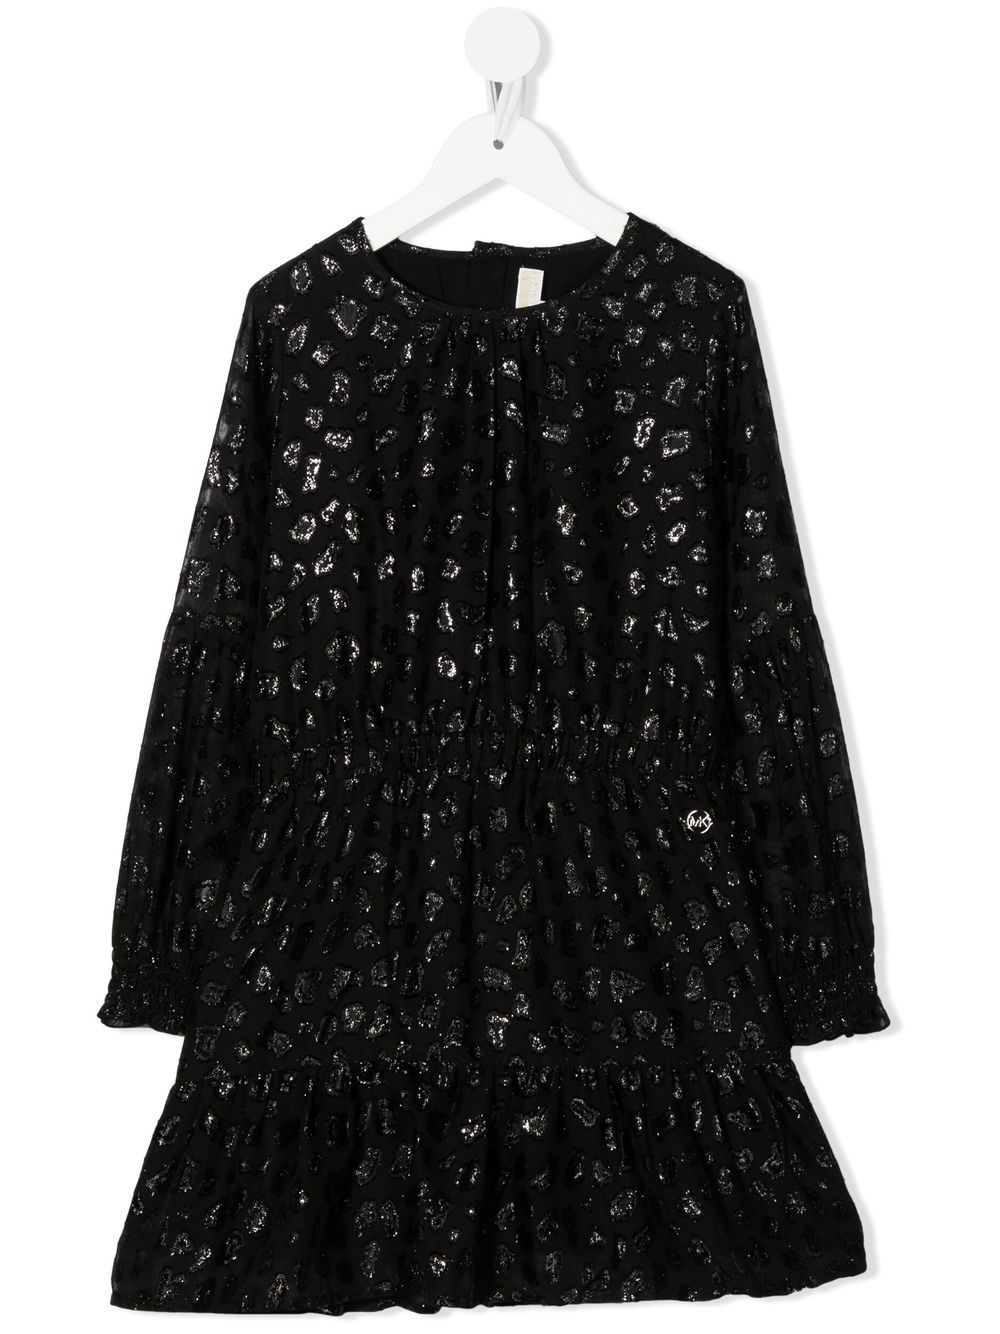 Michael Kors Kids metallic leopard-pattern dress - Black